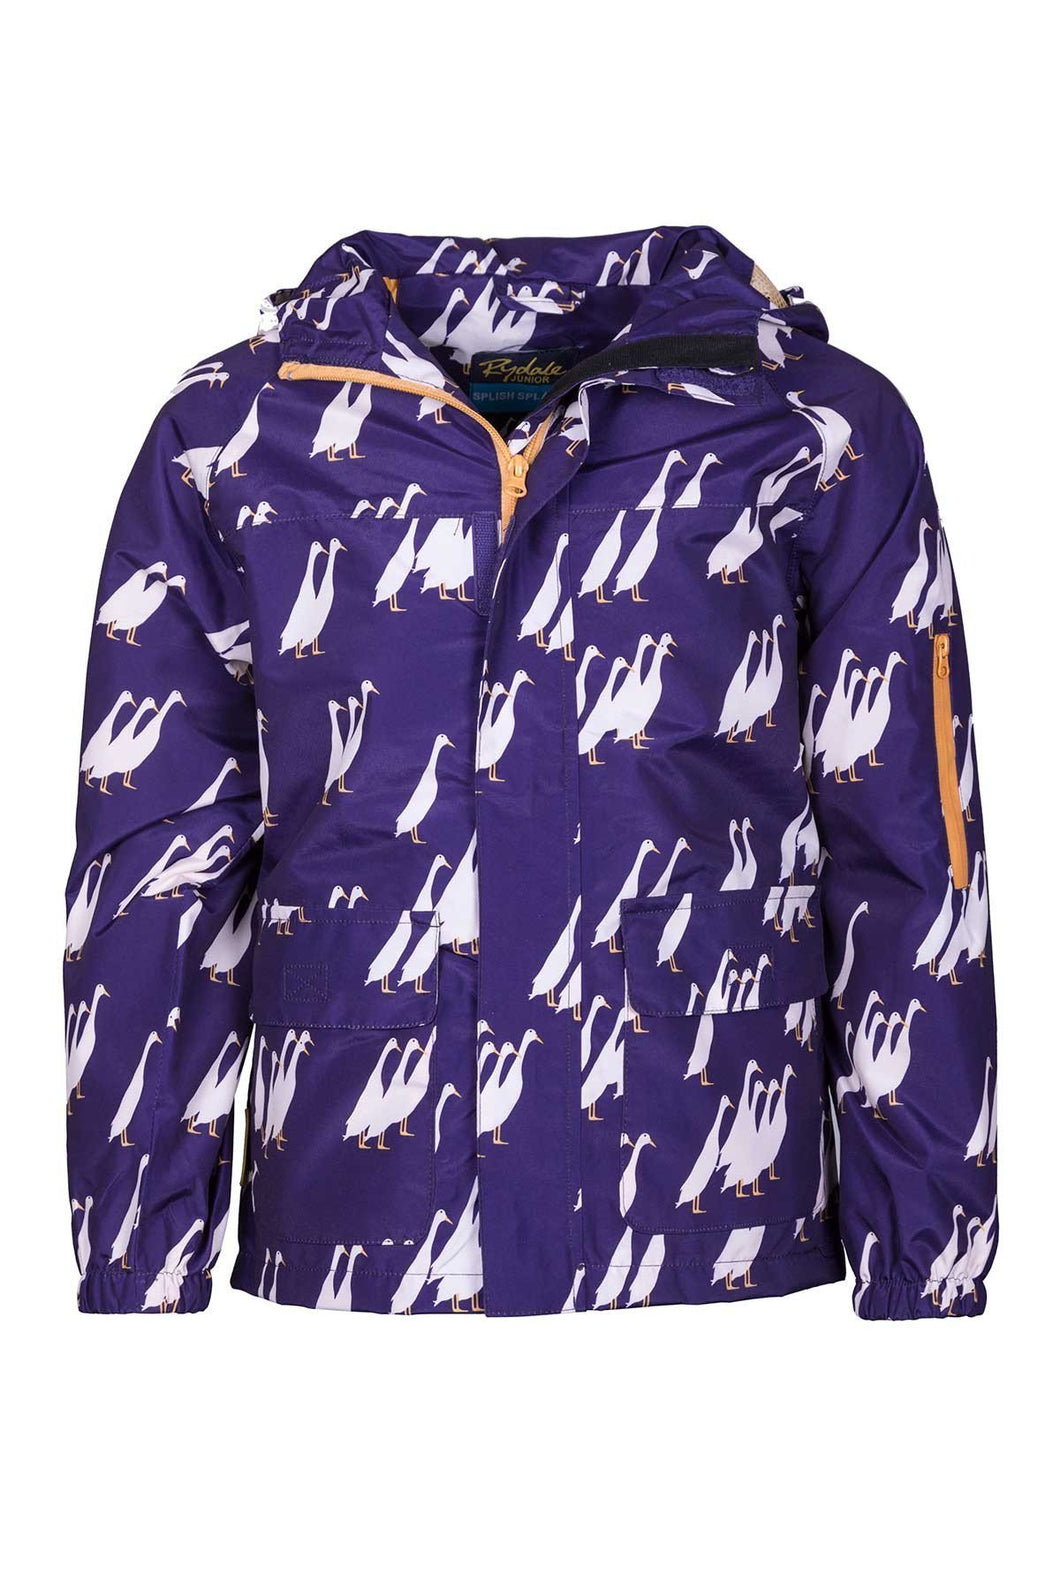 Duckie Purple - Children's Patterned Raincoat